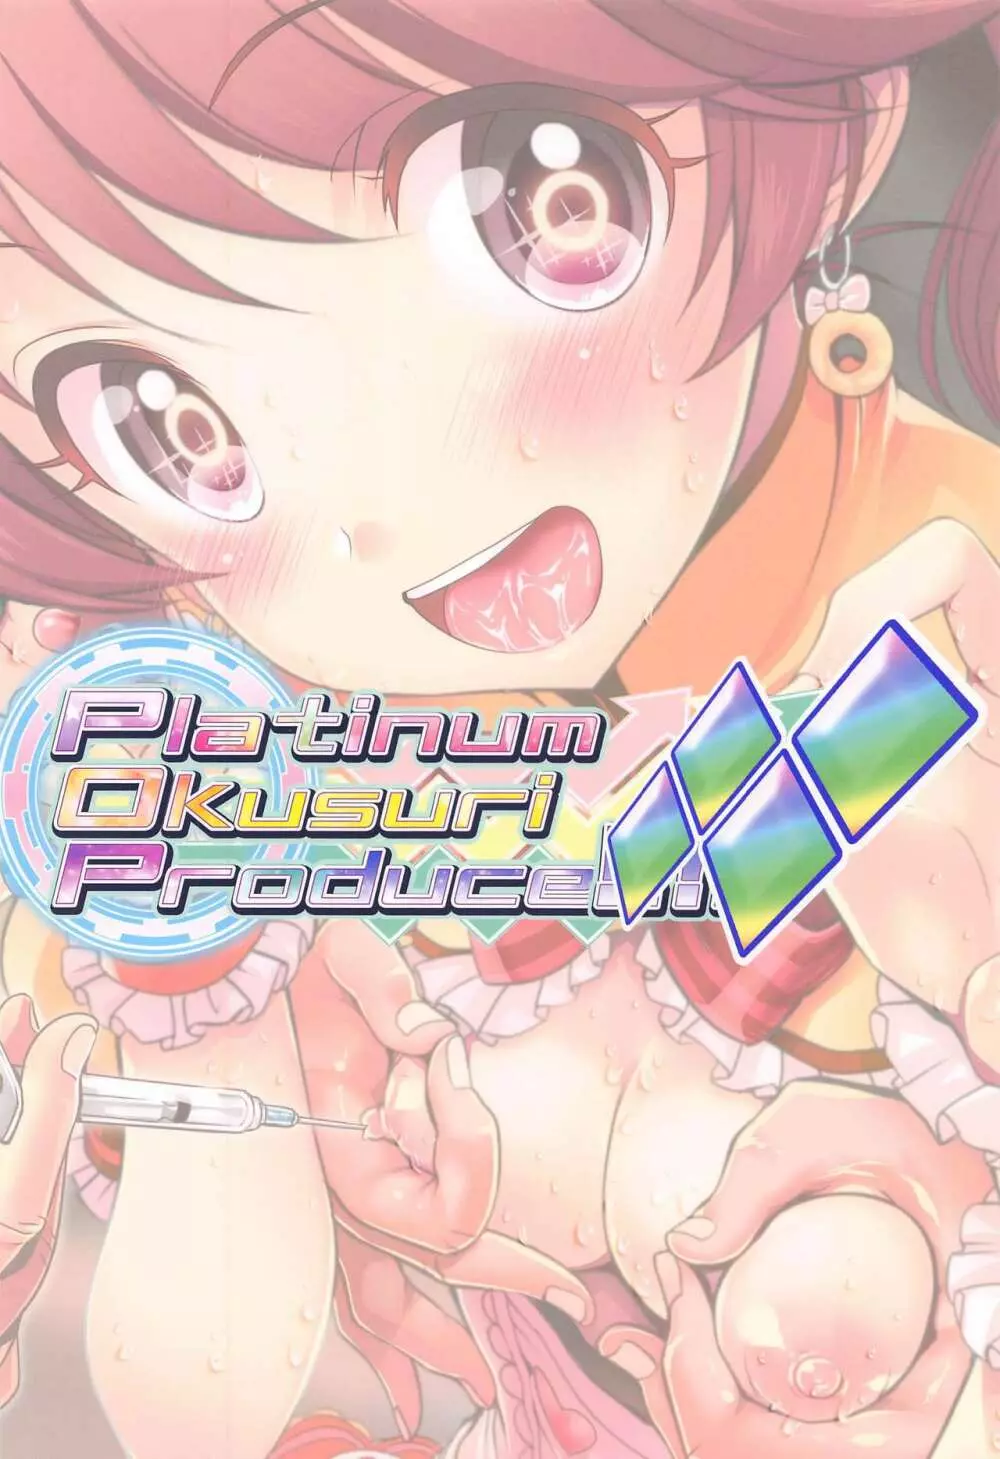 Platinum Okusuri Produce!!!! ◇◇◇◇ 18ページ